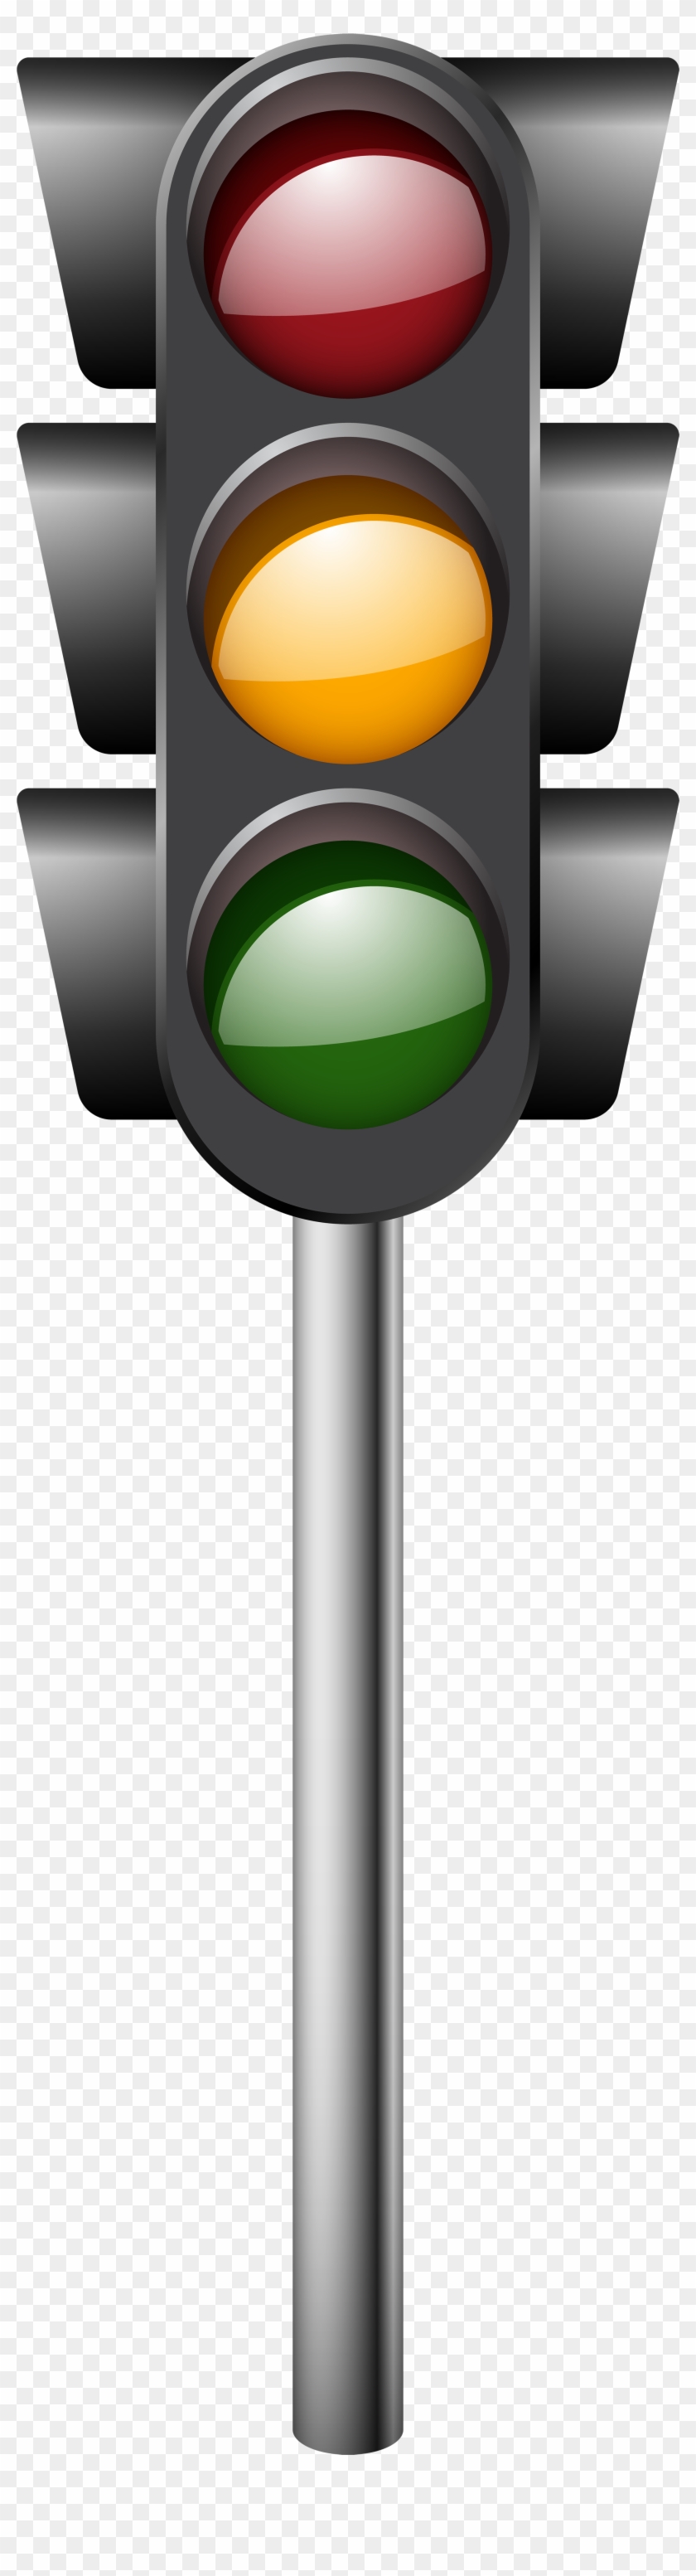 Traffic Light Png Clipart - Traffic Light Clipart #129131